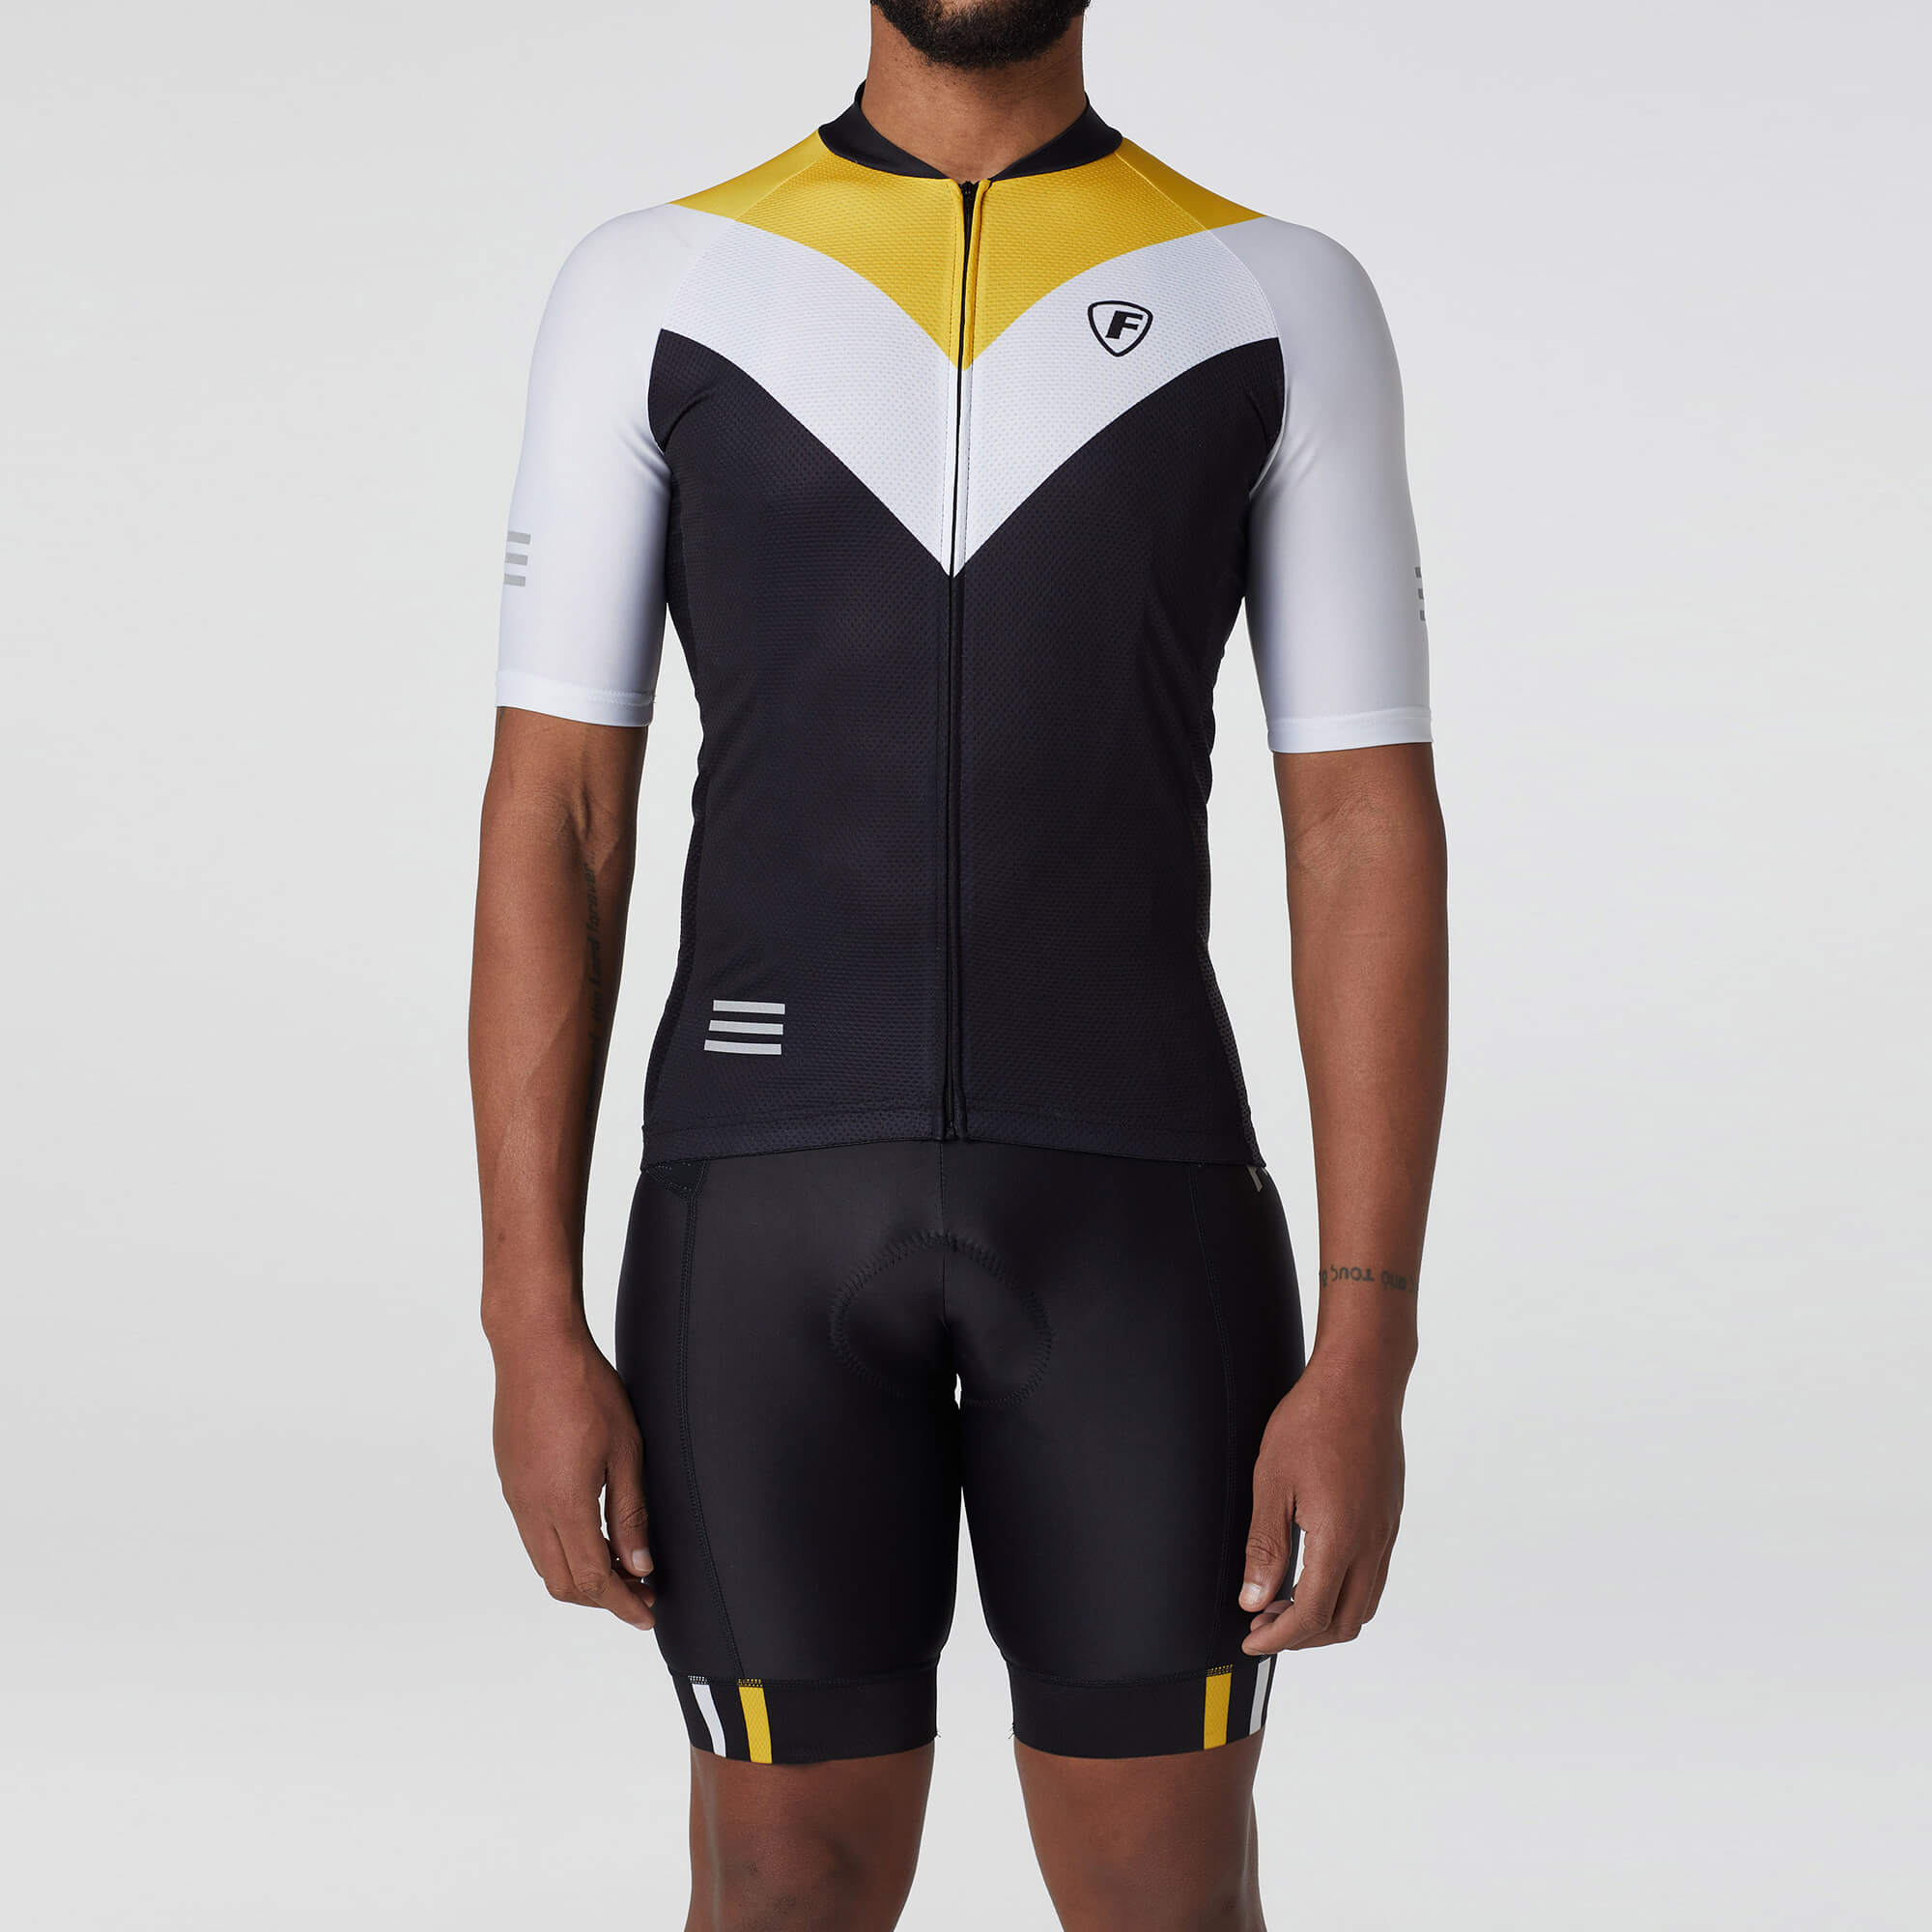 Fdx Men's Black & yellow Short Sleeve Cycling Jersey Summer Breathable Mesh Fabric, Bib Short Hi Viz Reflectors & Pockets Cycling Gear Australia